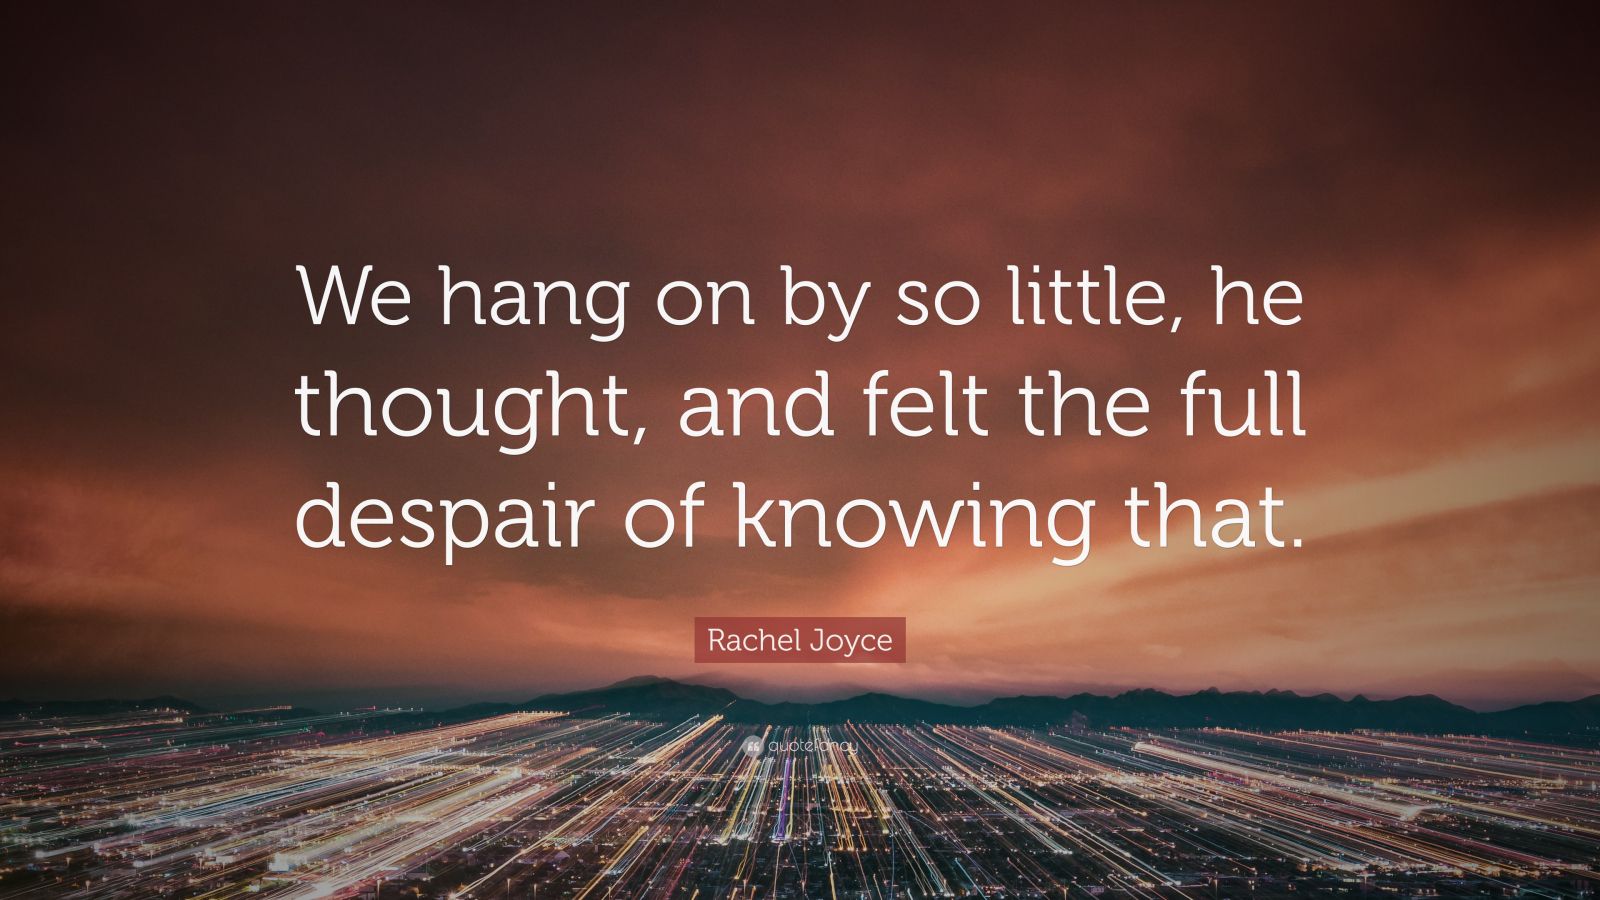 Rachel Joyce Quote: “We hang on by so little, he thought, and felt ...